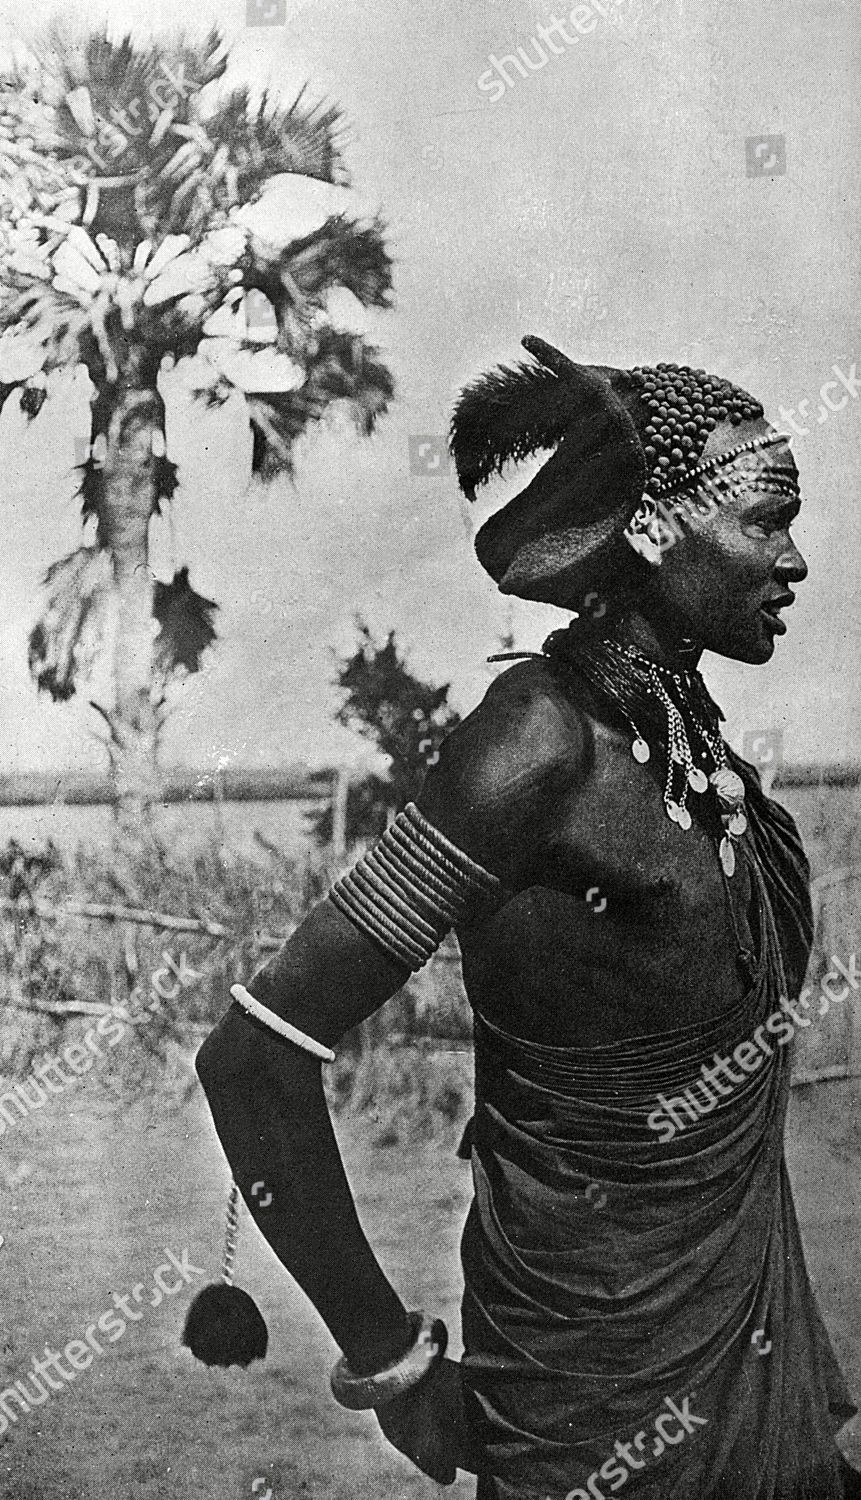 shilluk-warrior-south-sudan-1936-shutterstock-editorial-9829196a.jpg